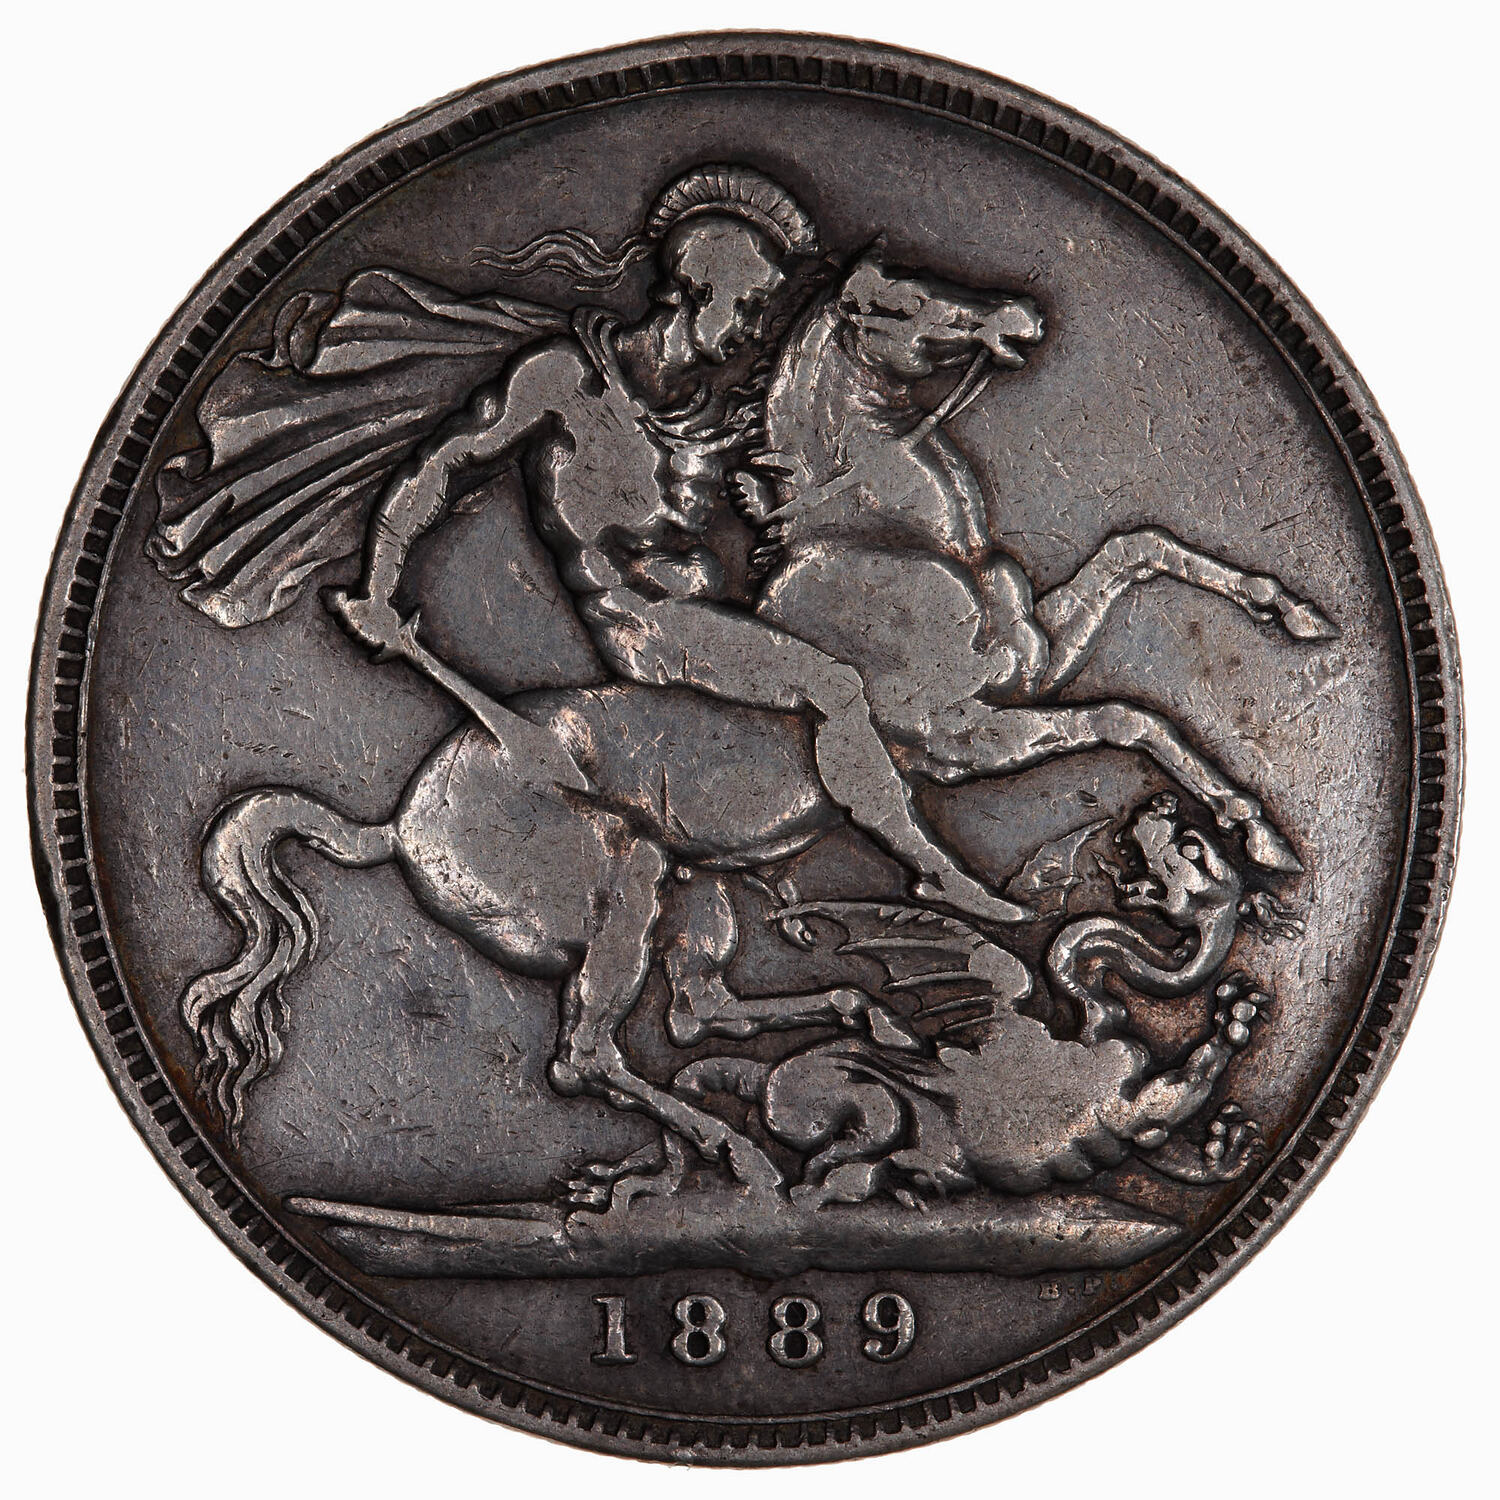 Coin - Crown, Queen Victoria, Great Britain, 1889